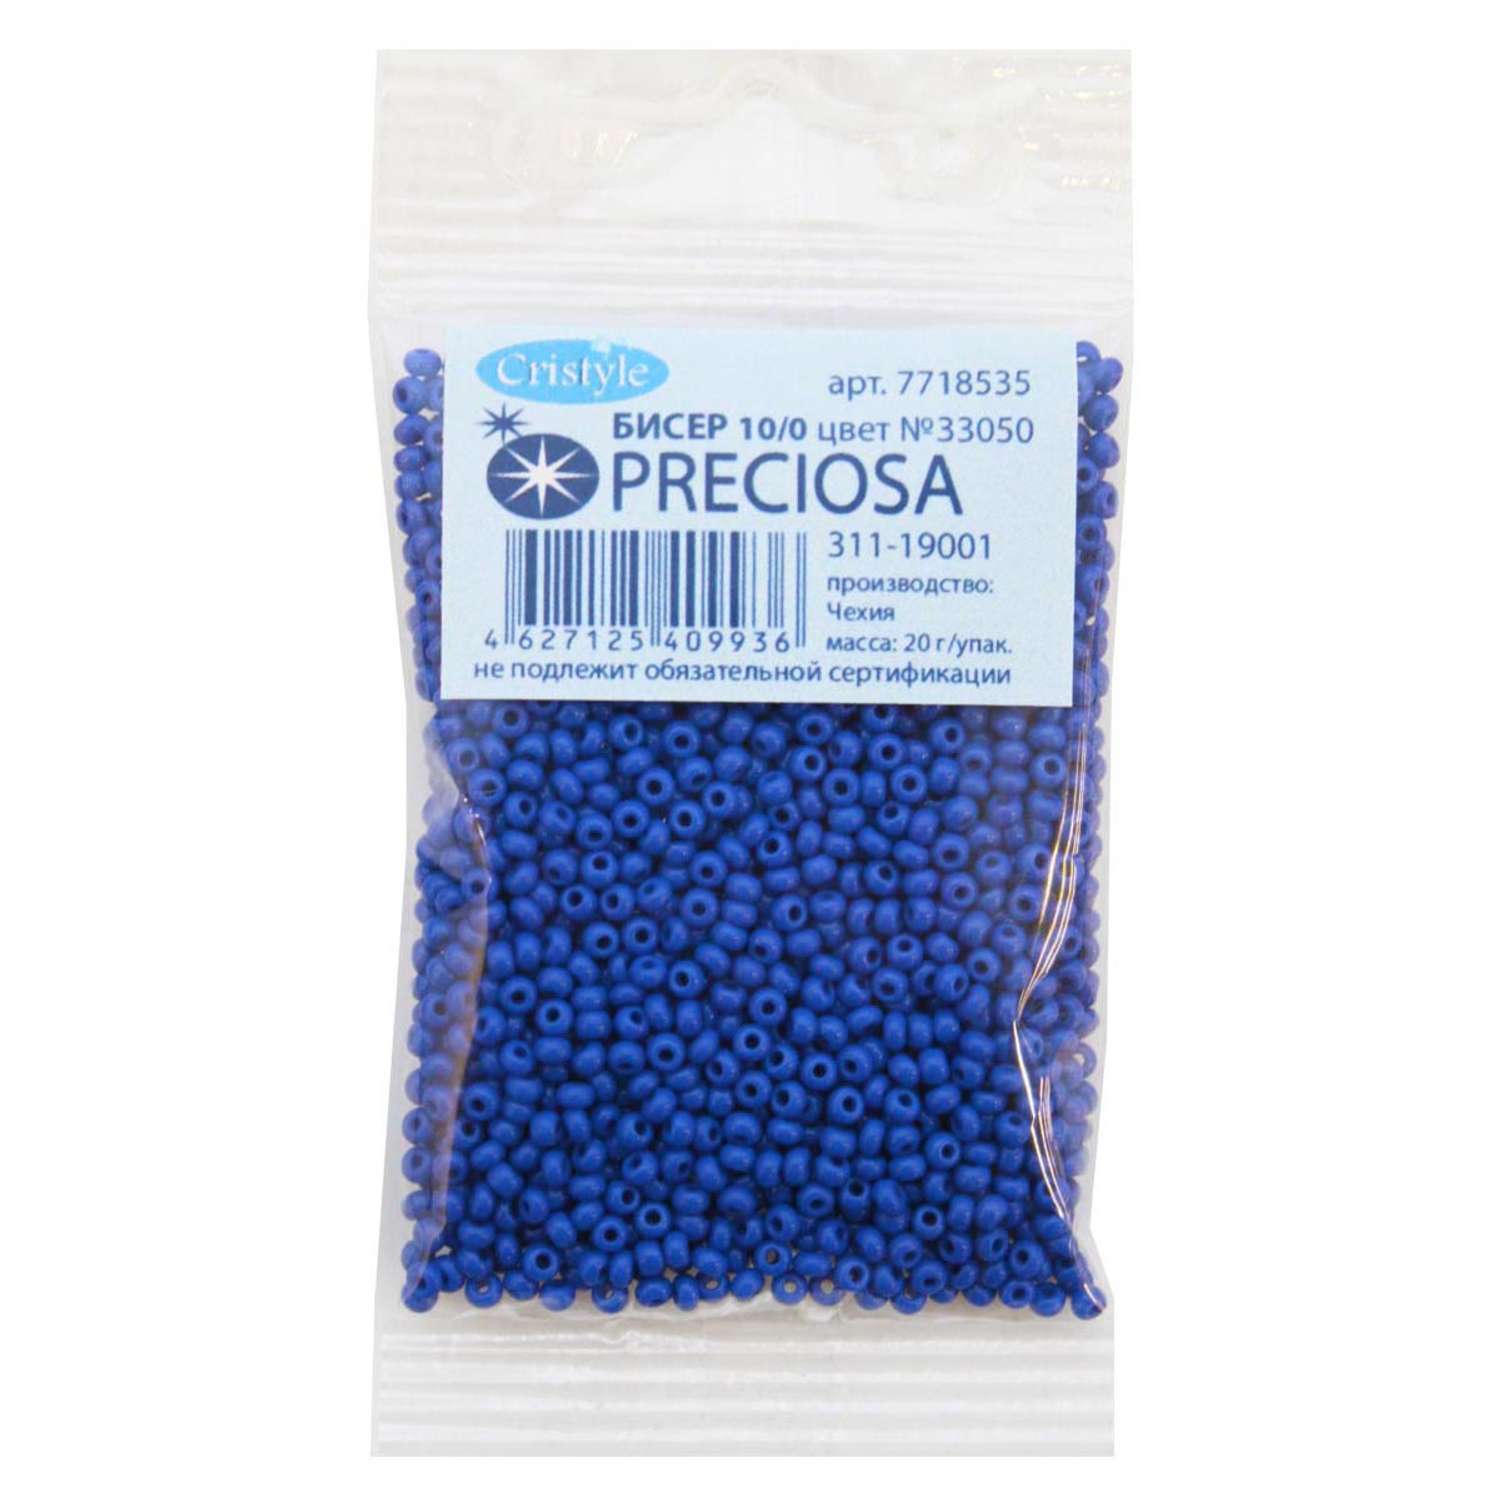 Бисер Preciosa чешский непрозрачный 10/0 20 гр Прециоза 33050 ярко-голубой - фото 1